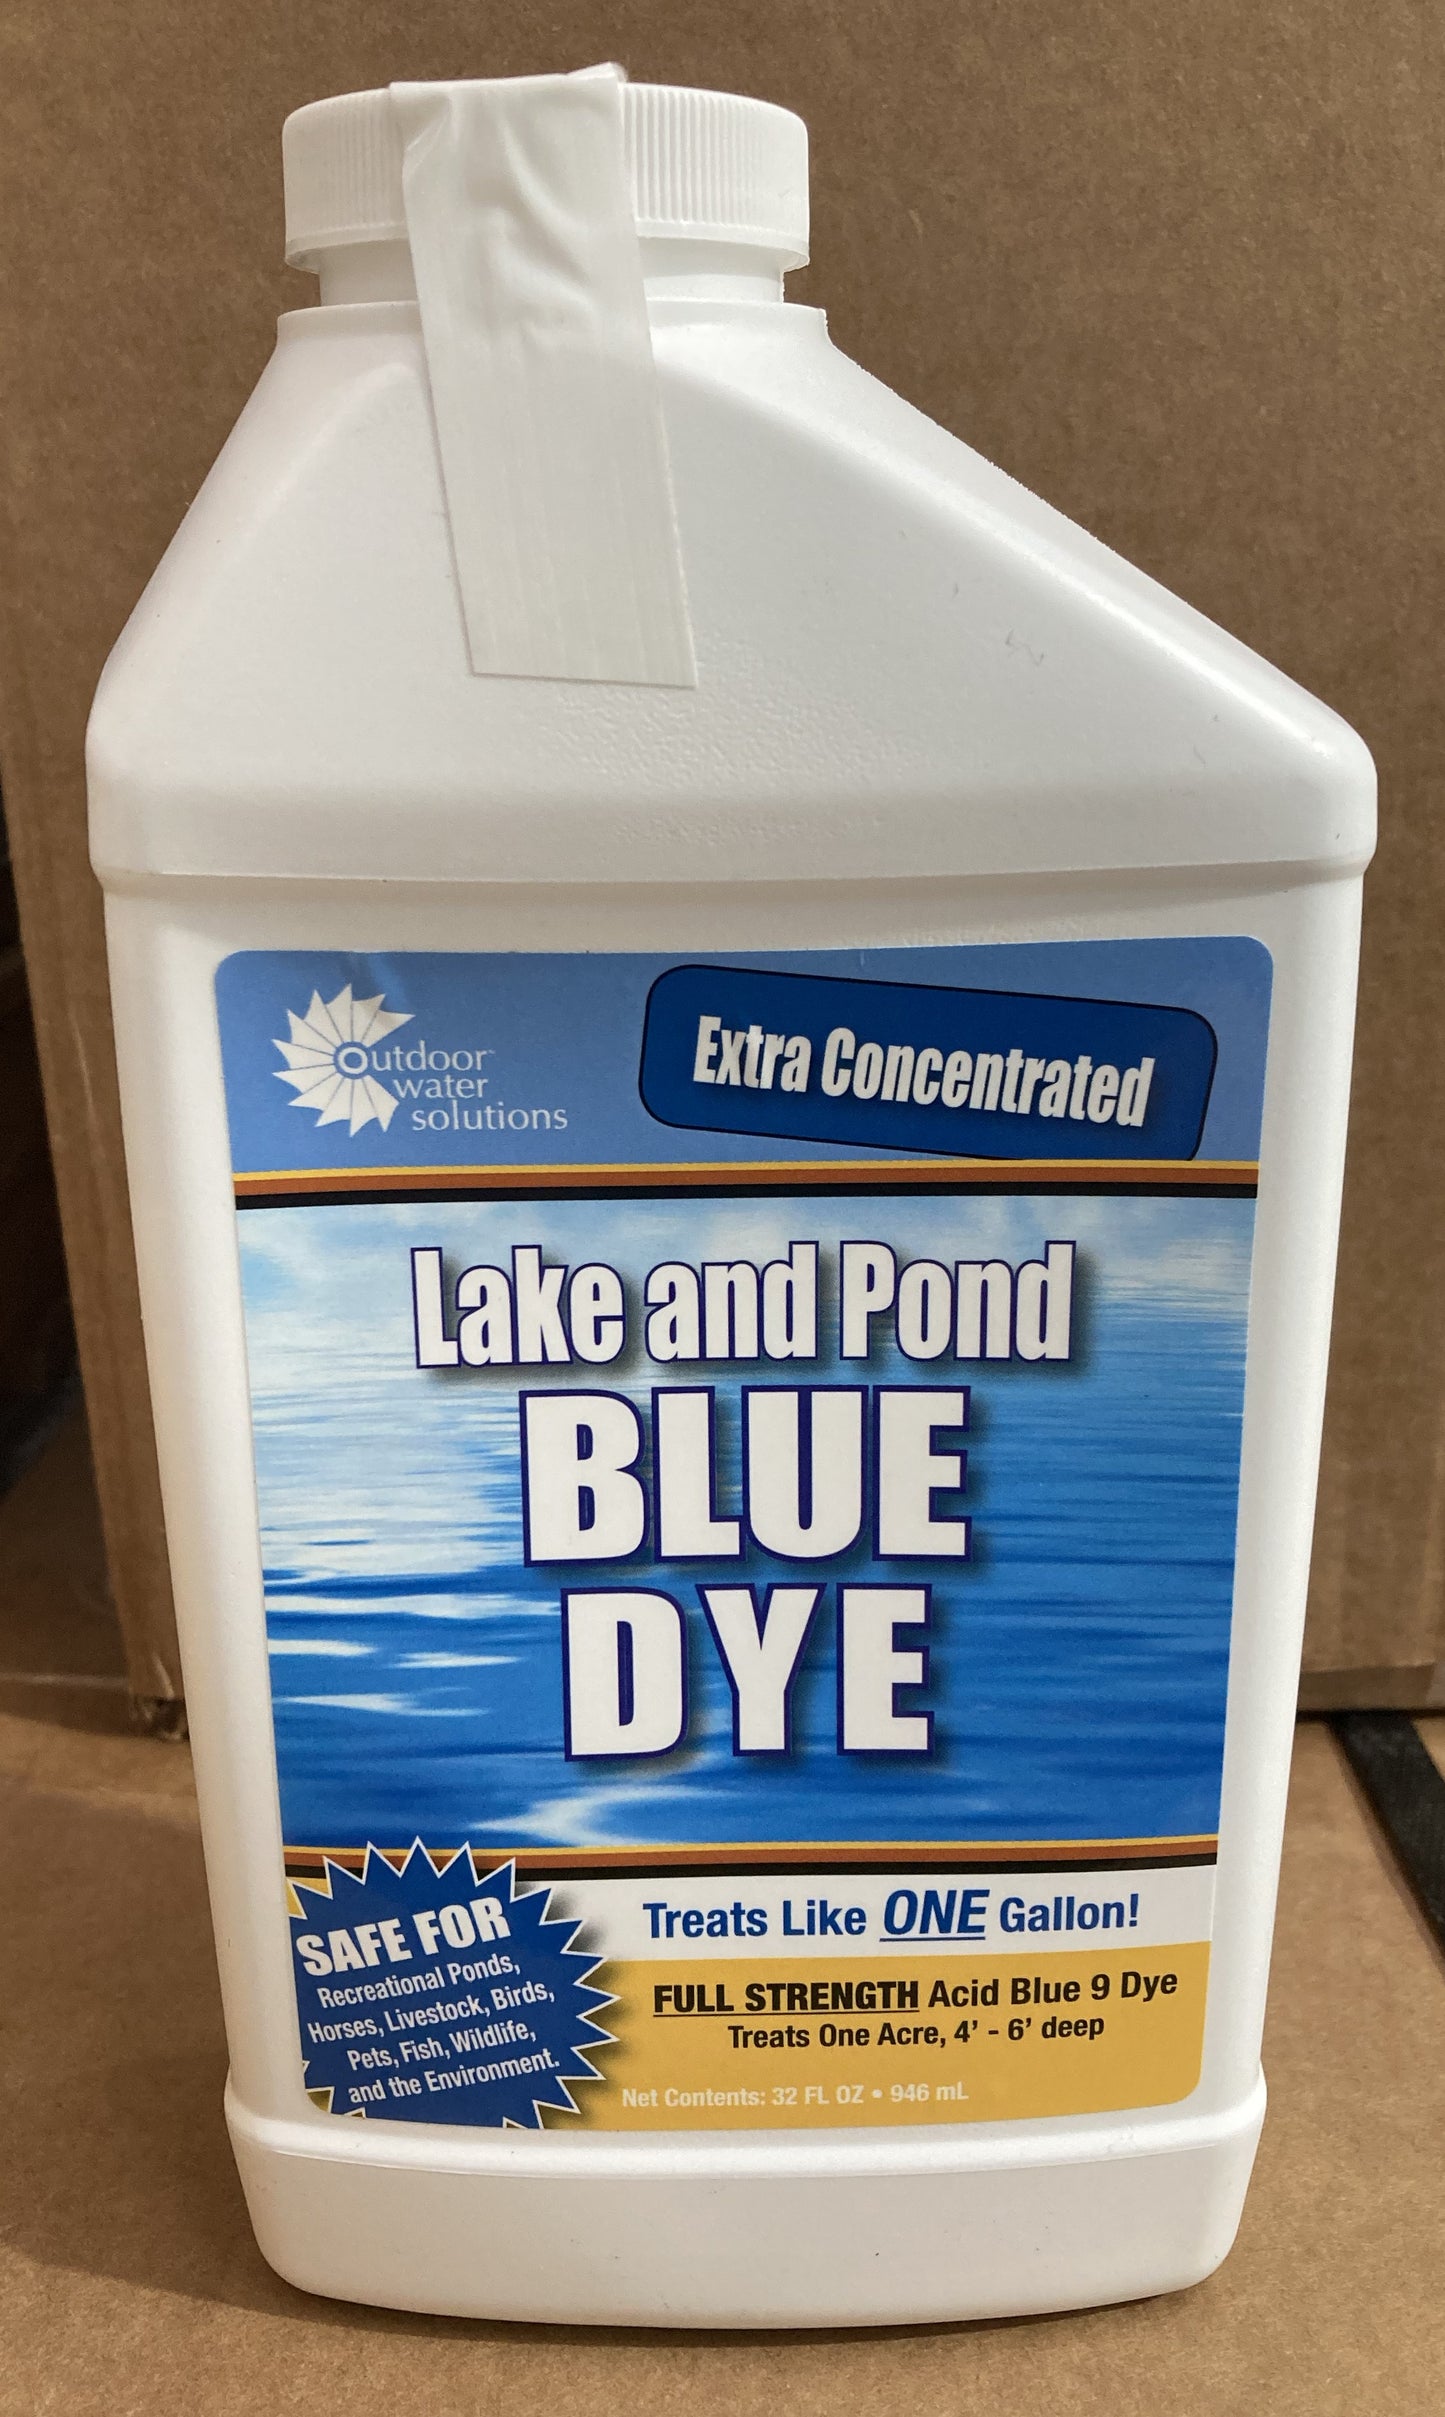 All Natural Deep Blue Pond Dye